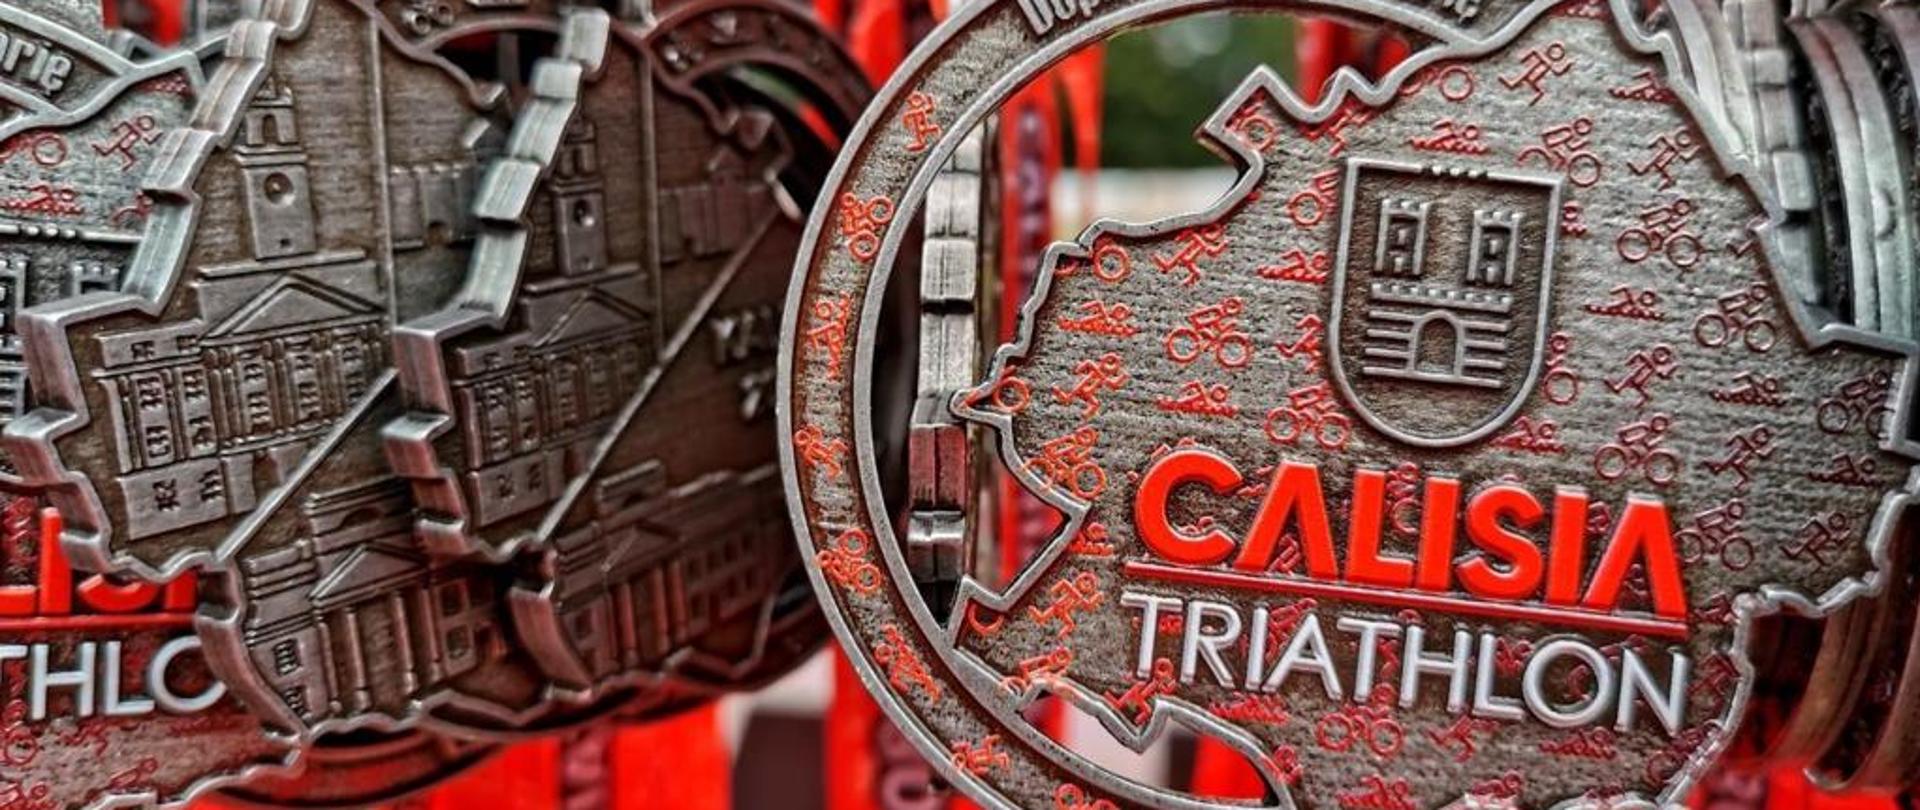 Medal Calisia Triathlon